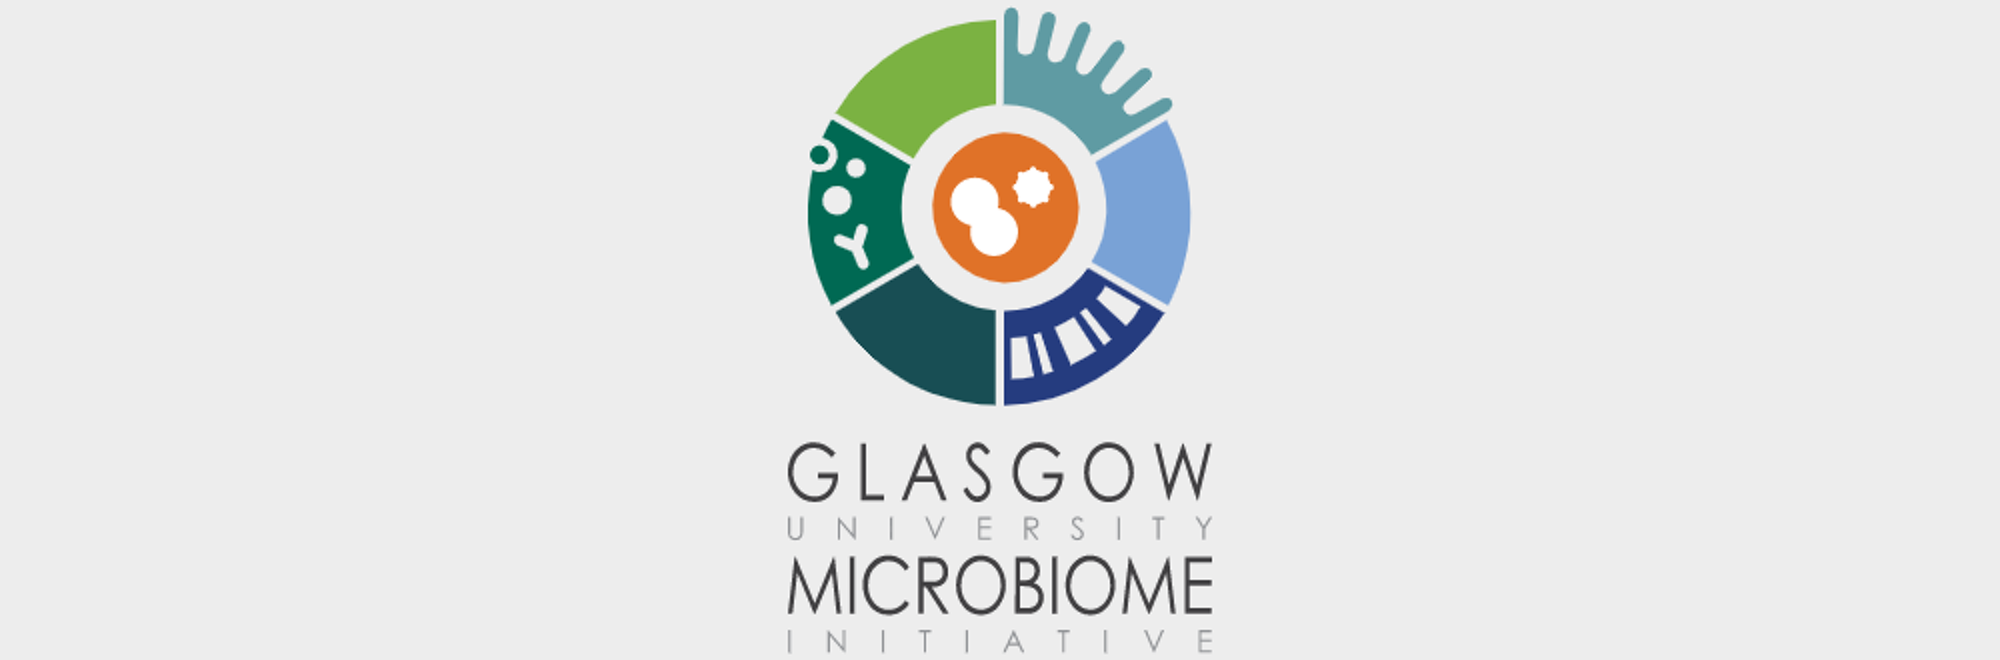 Glasgow University Microbiome Initiative logo large